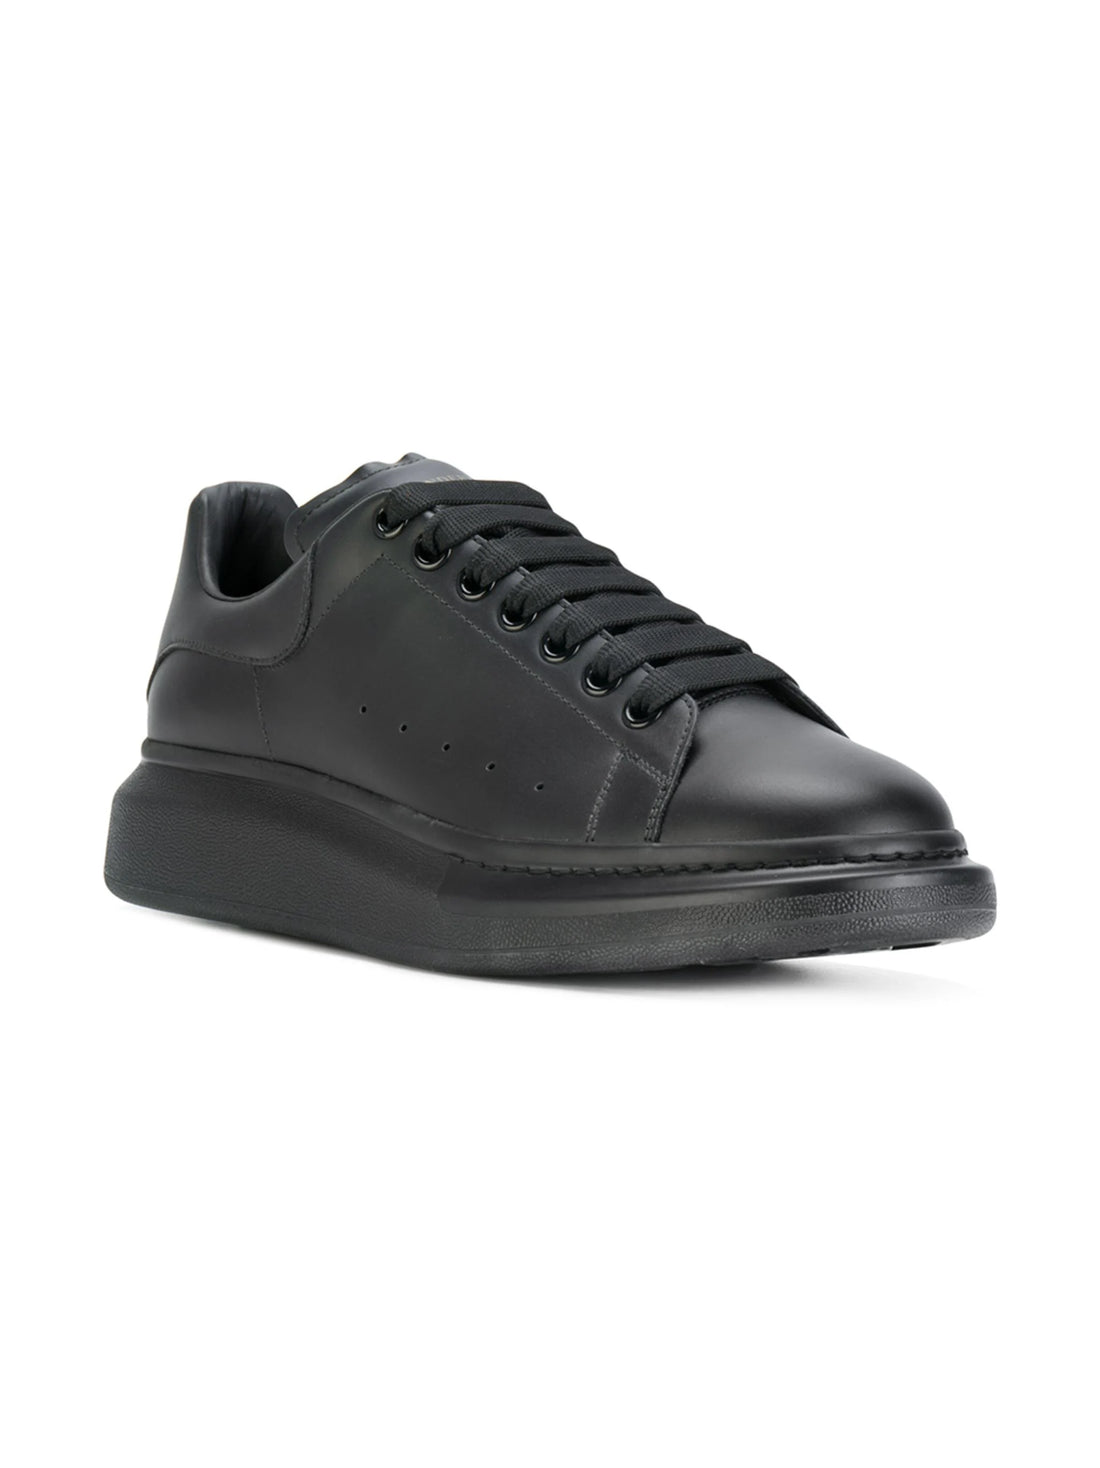 ALEXANDER MCQUEEN Oversized Sole Leather Sneakers Black/Black - MAISONDEFASHION.COM